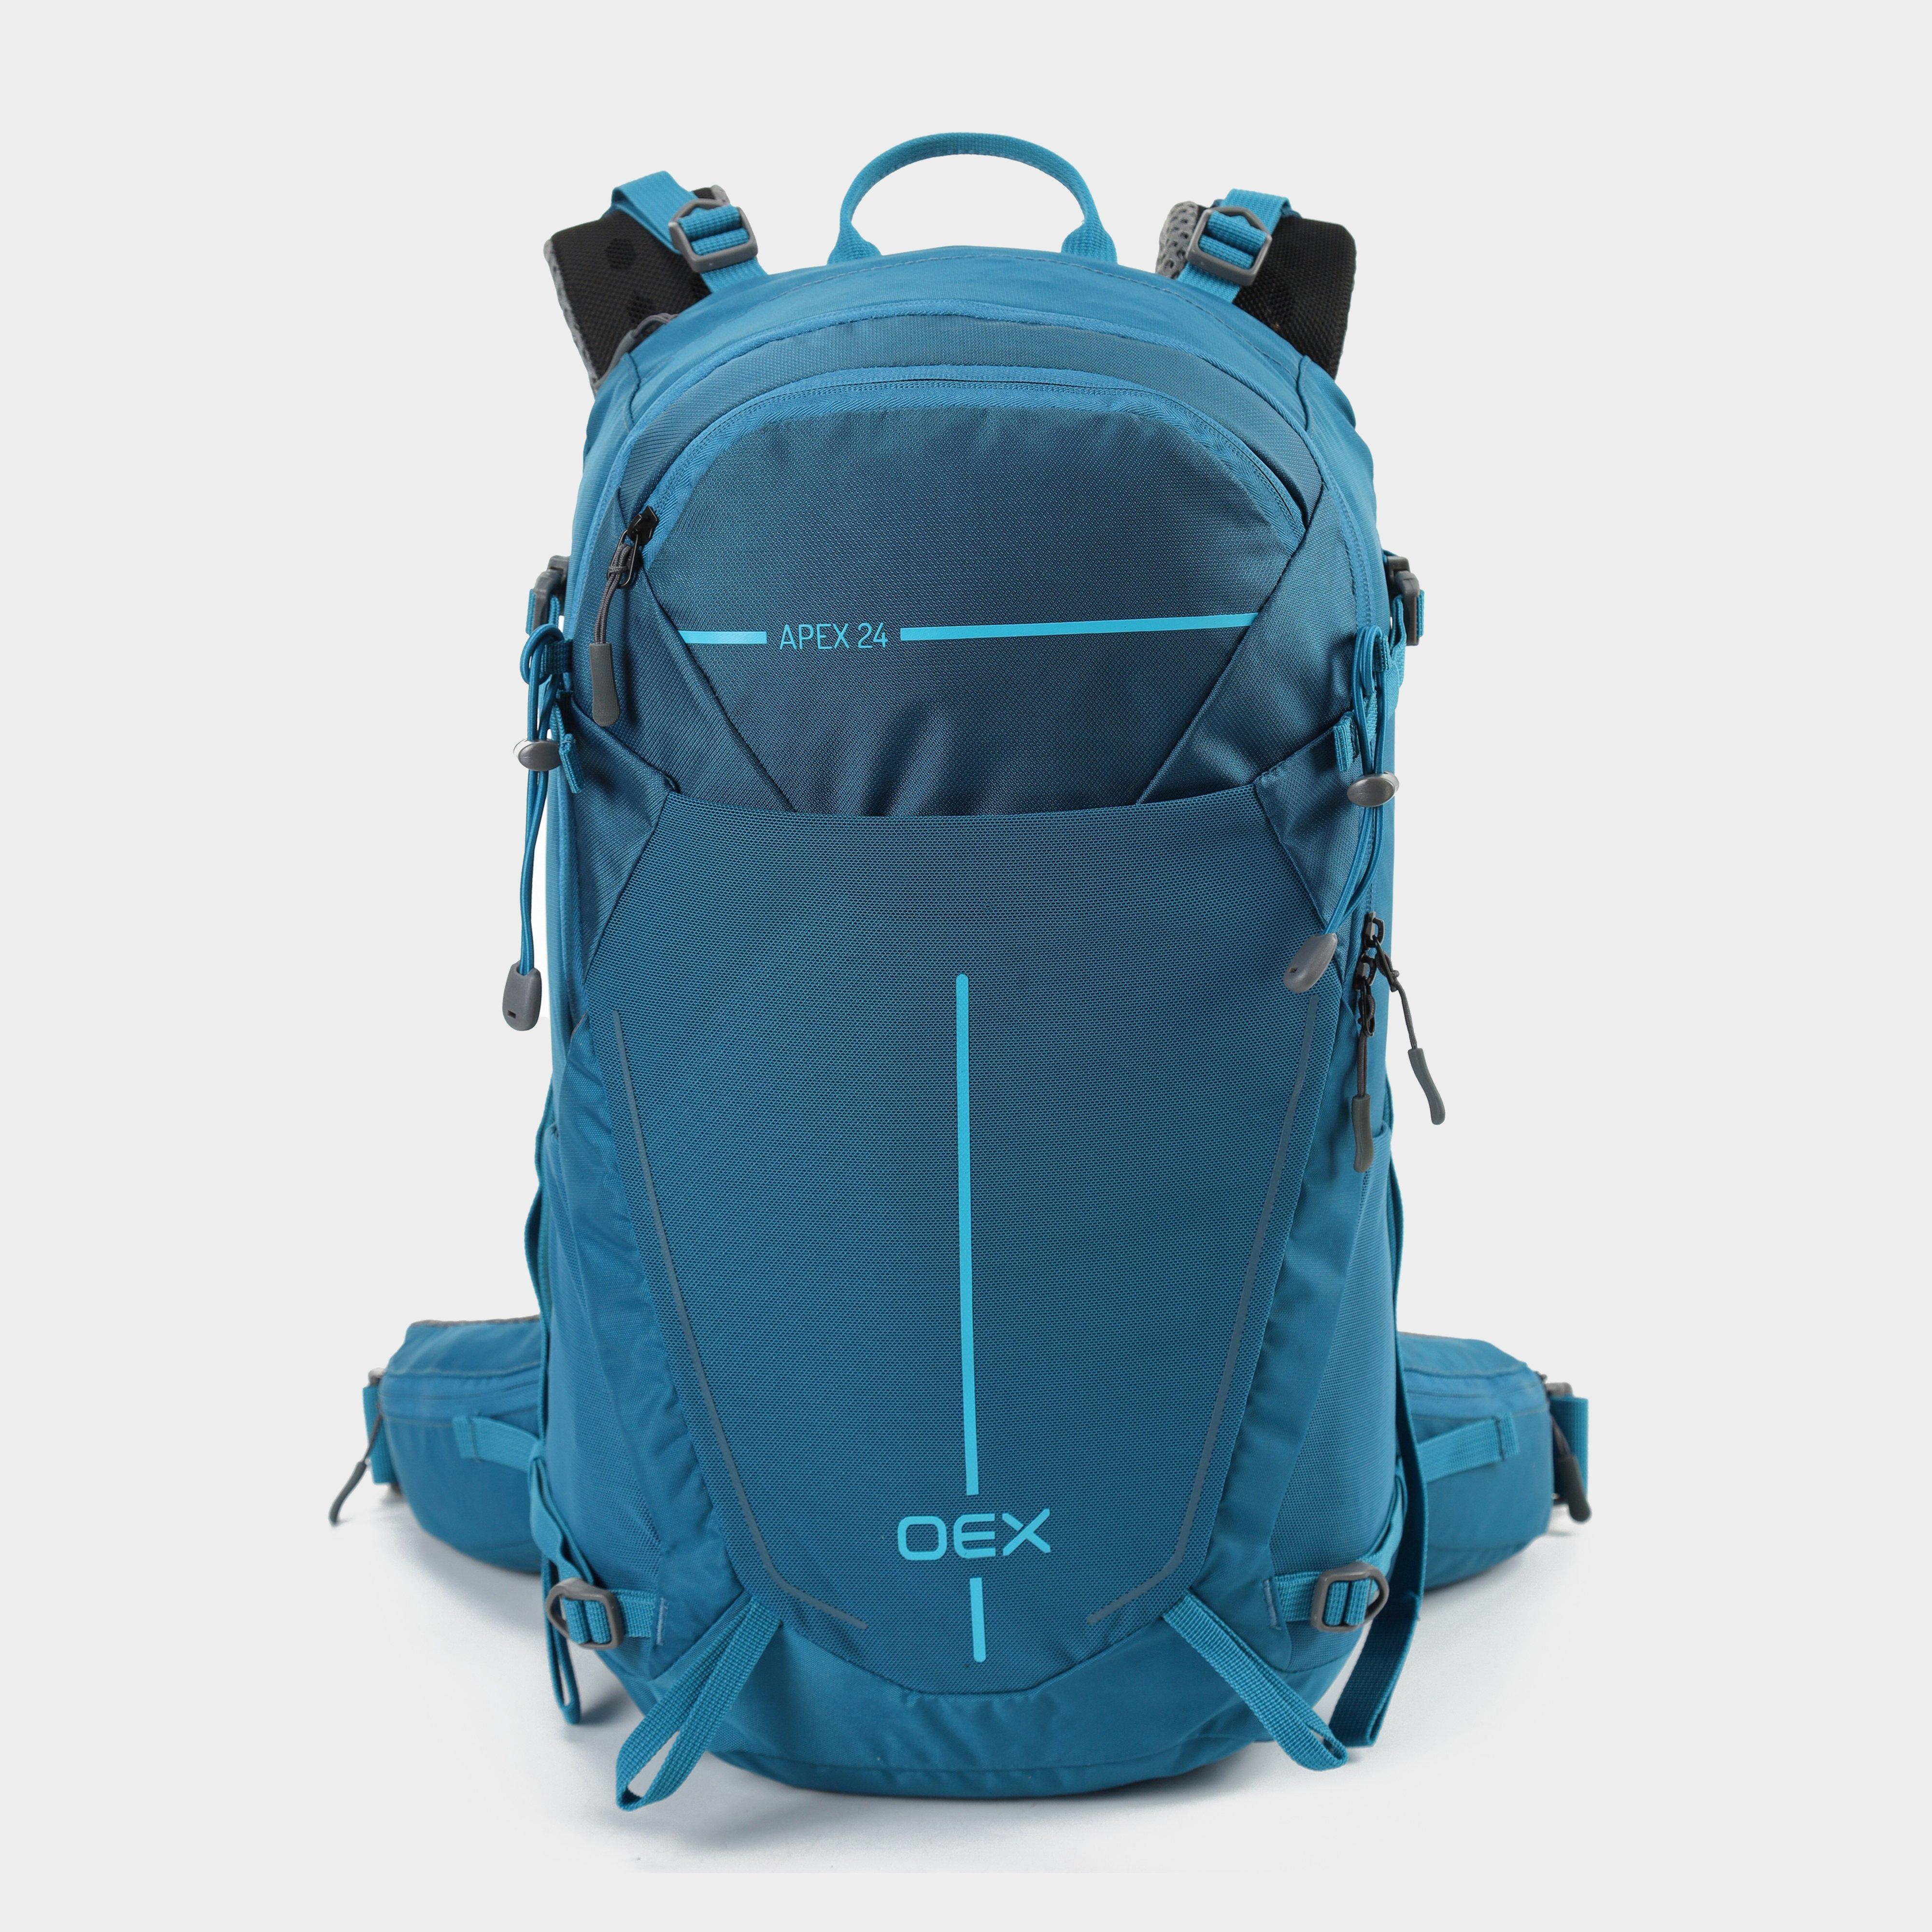  OEX Apex 24L Backpack, Blue